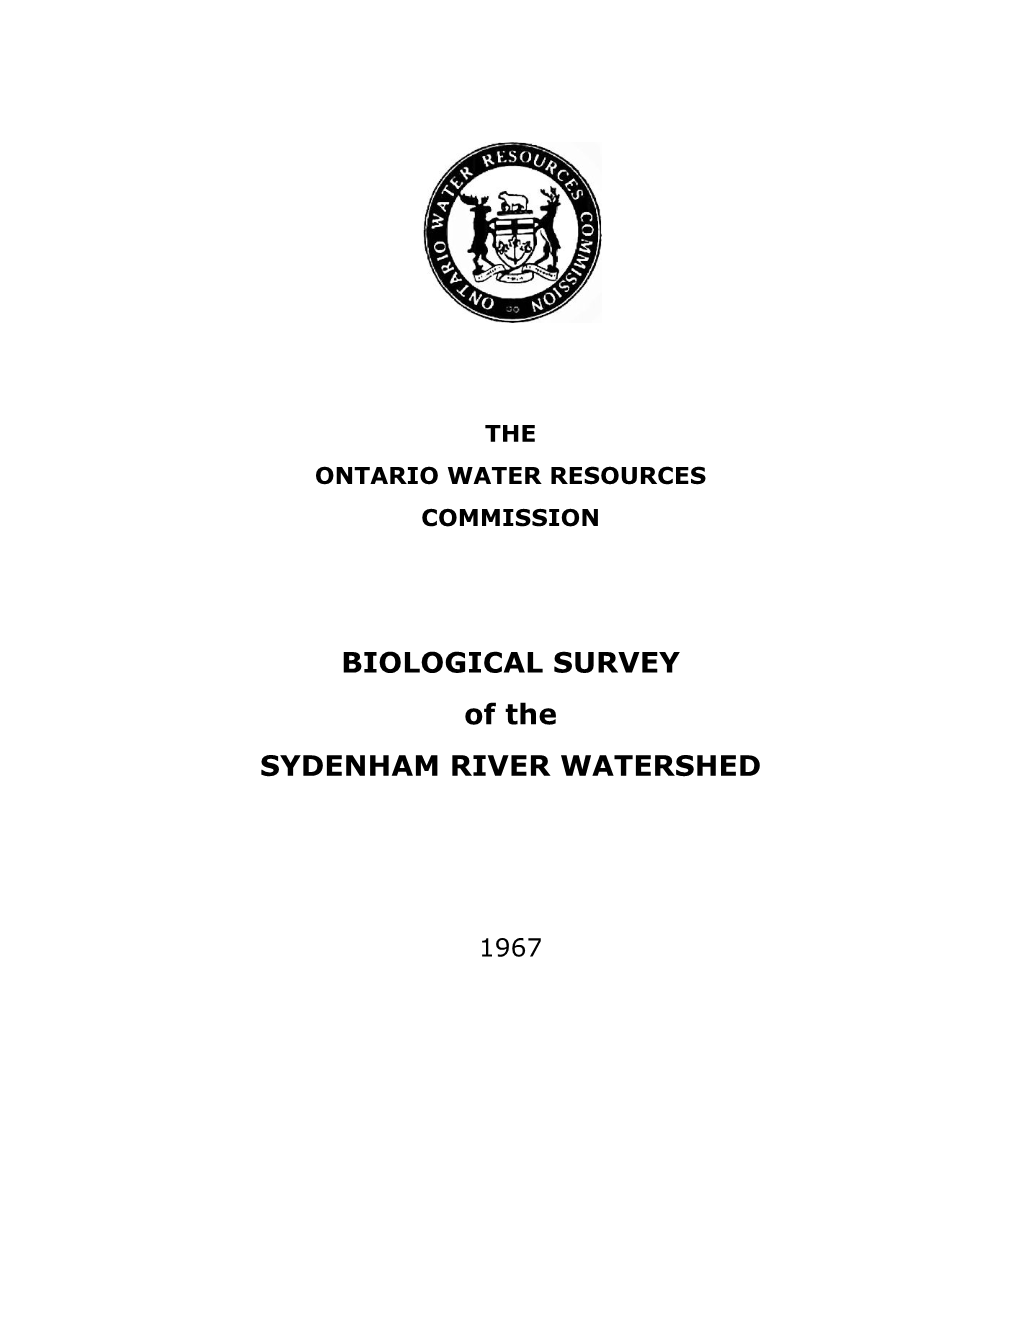 Biological Survey of the Sydenham River Watershed, 1967. Publ